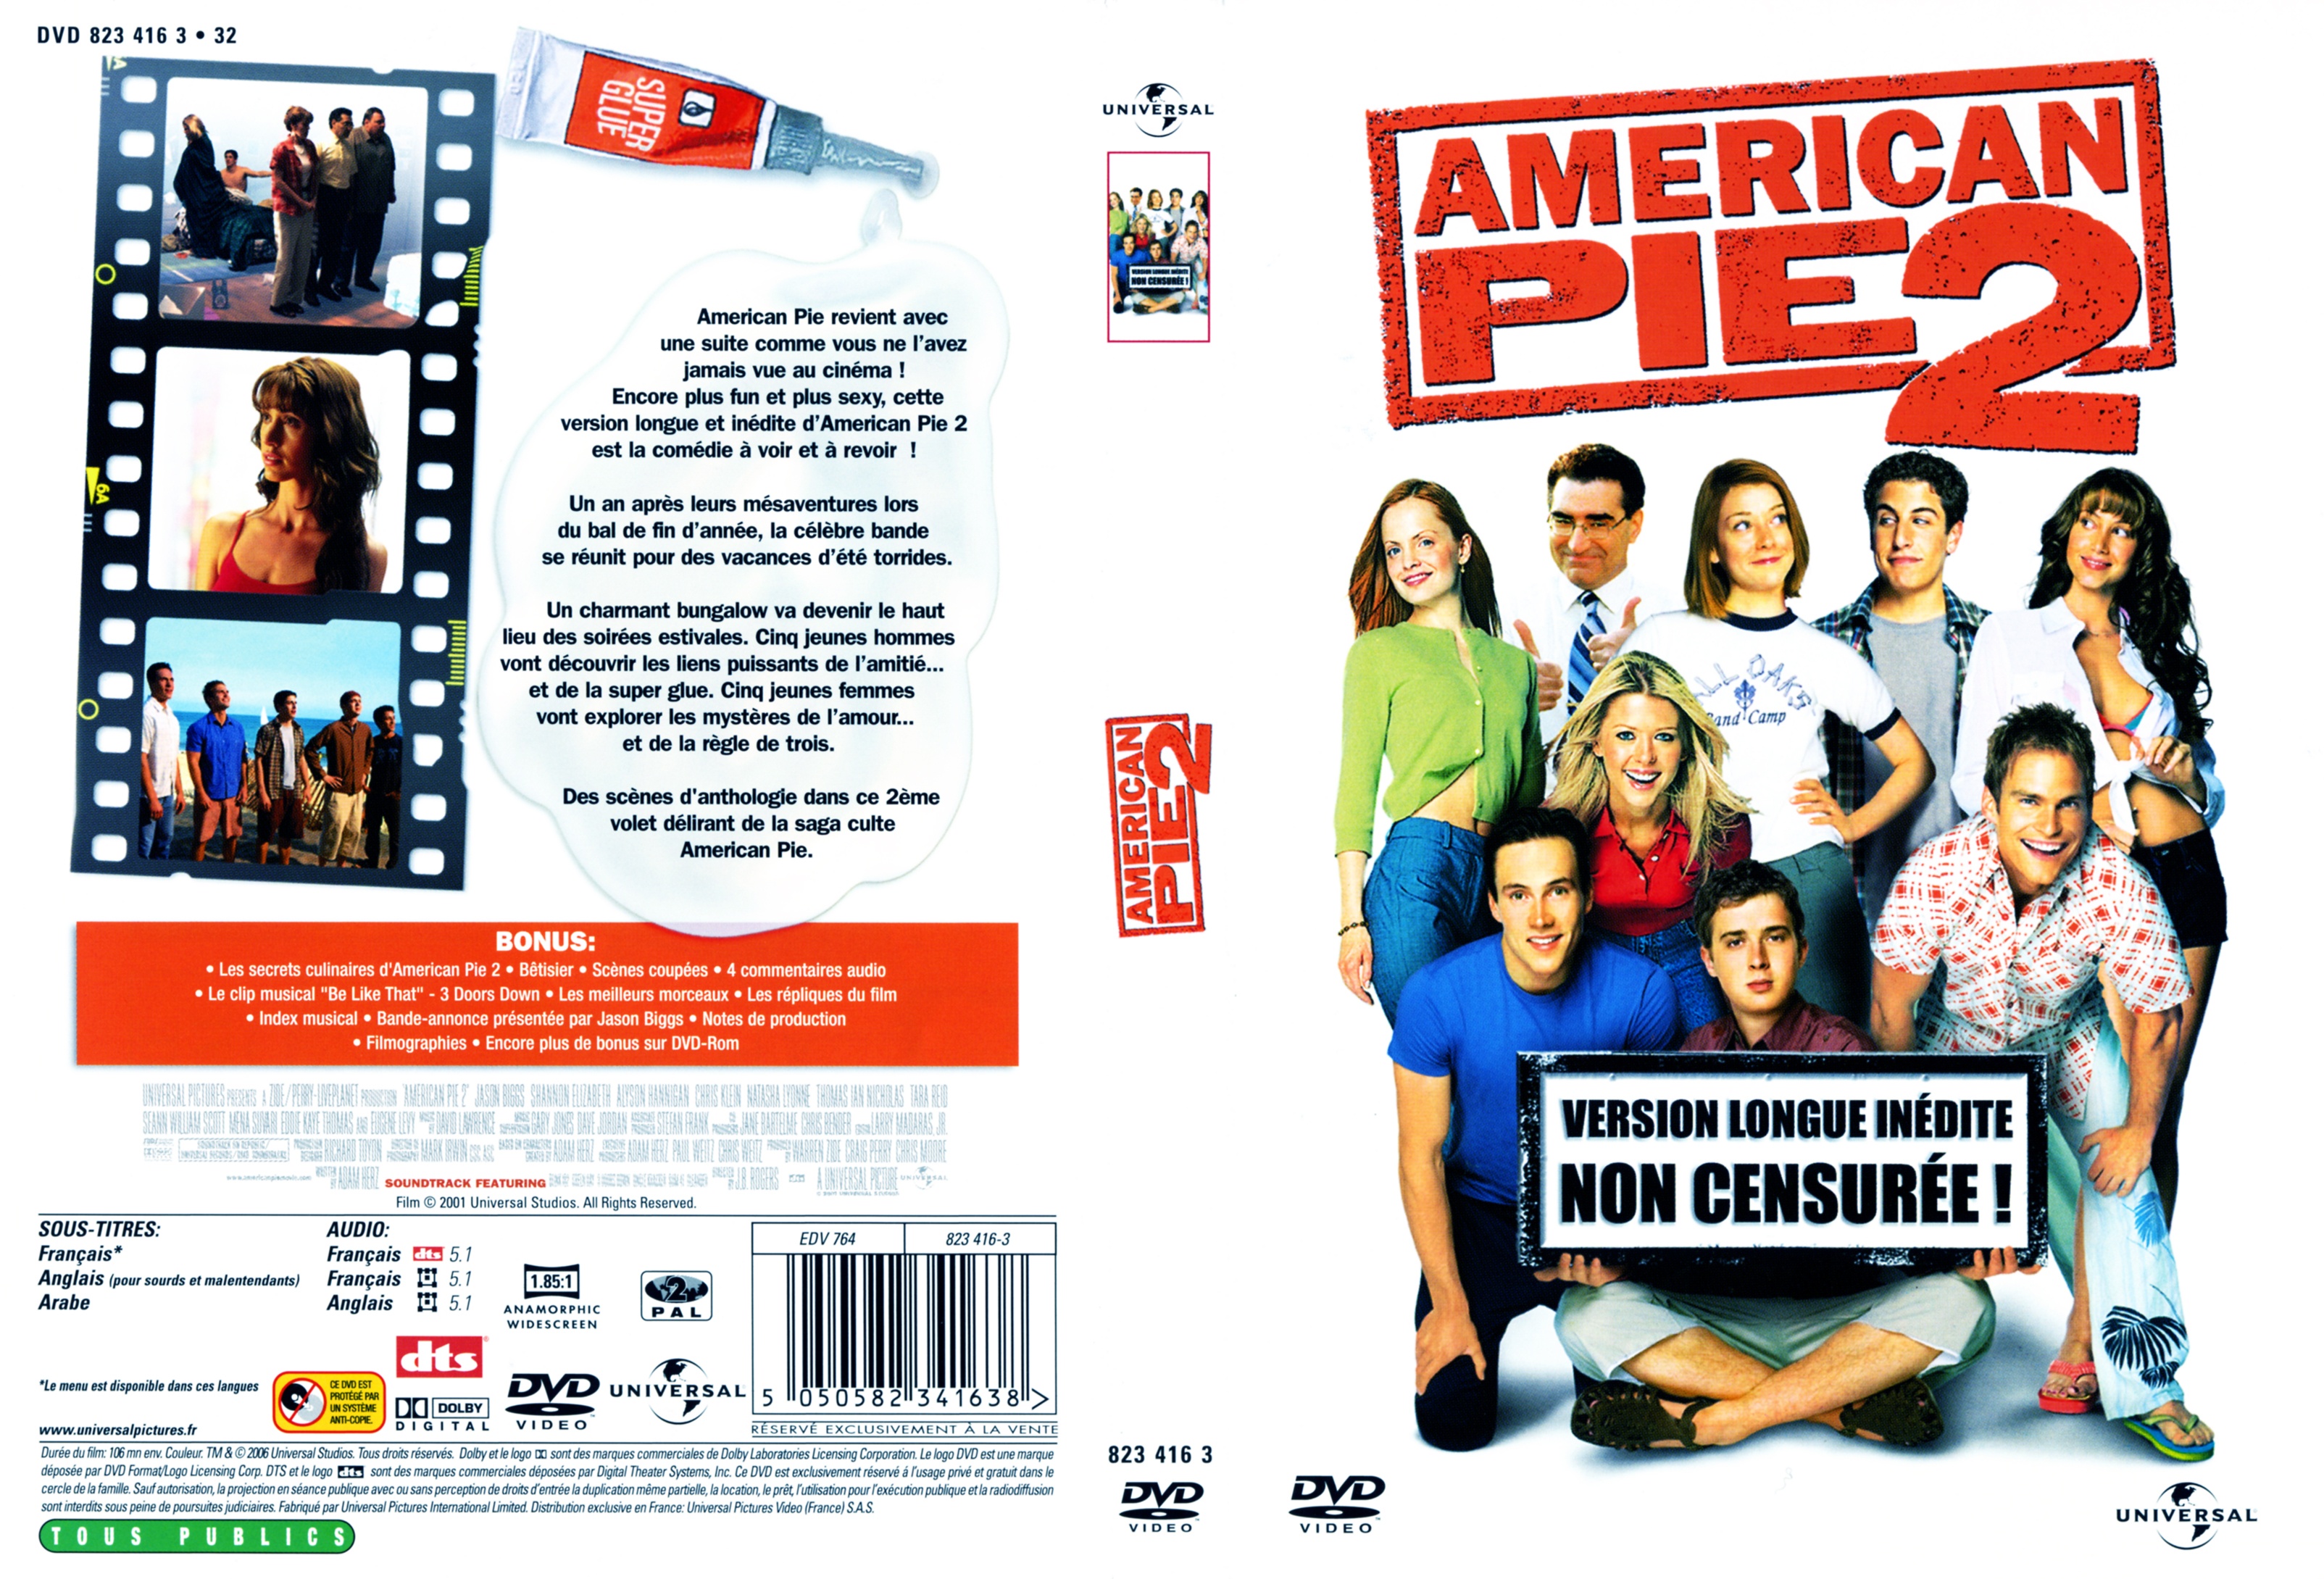 Jaquette DVD American pie 2 v2